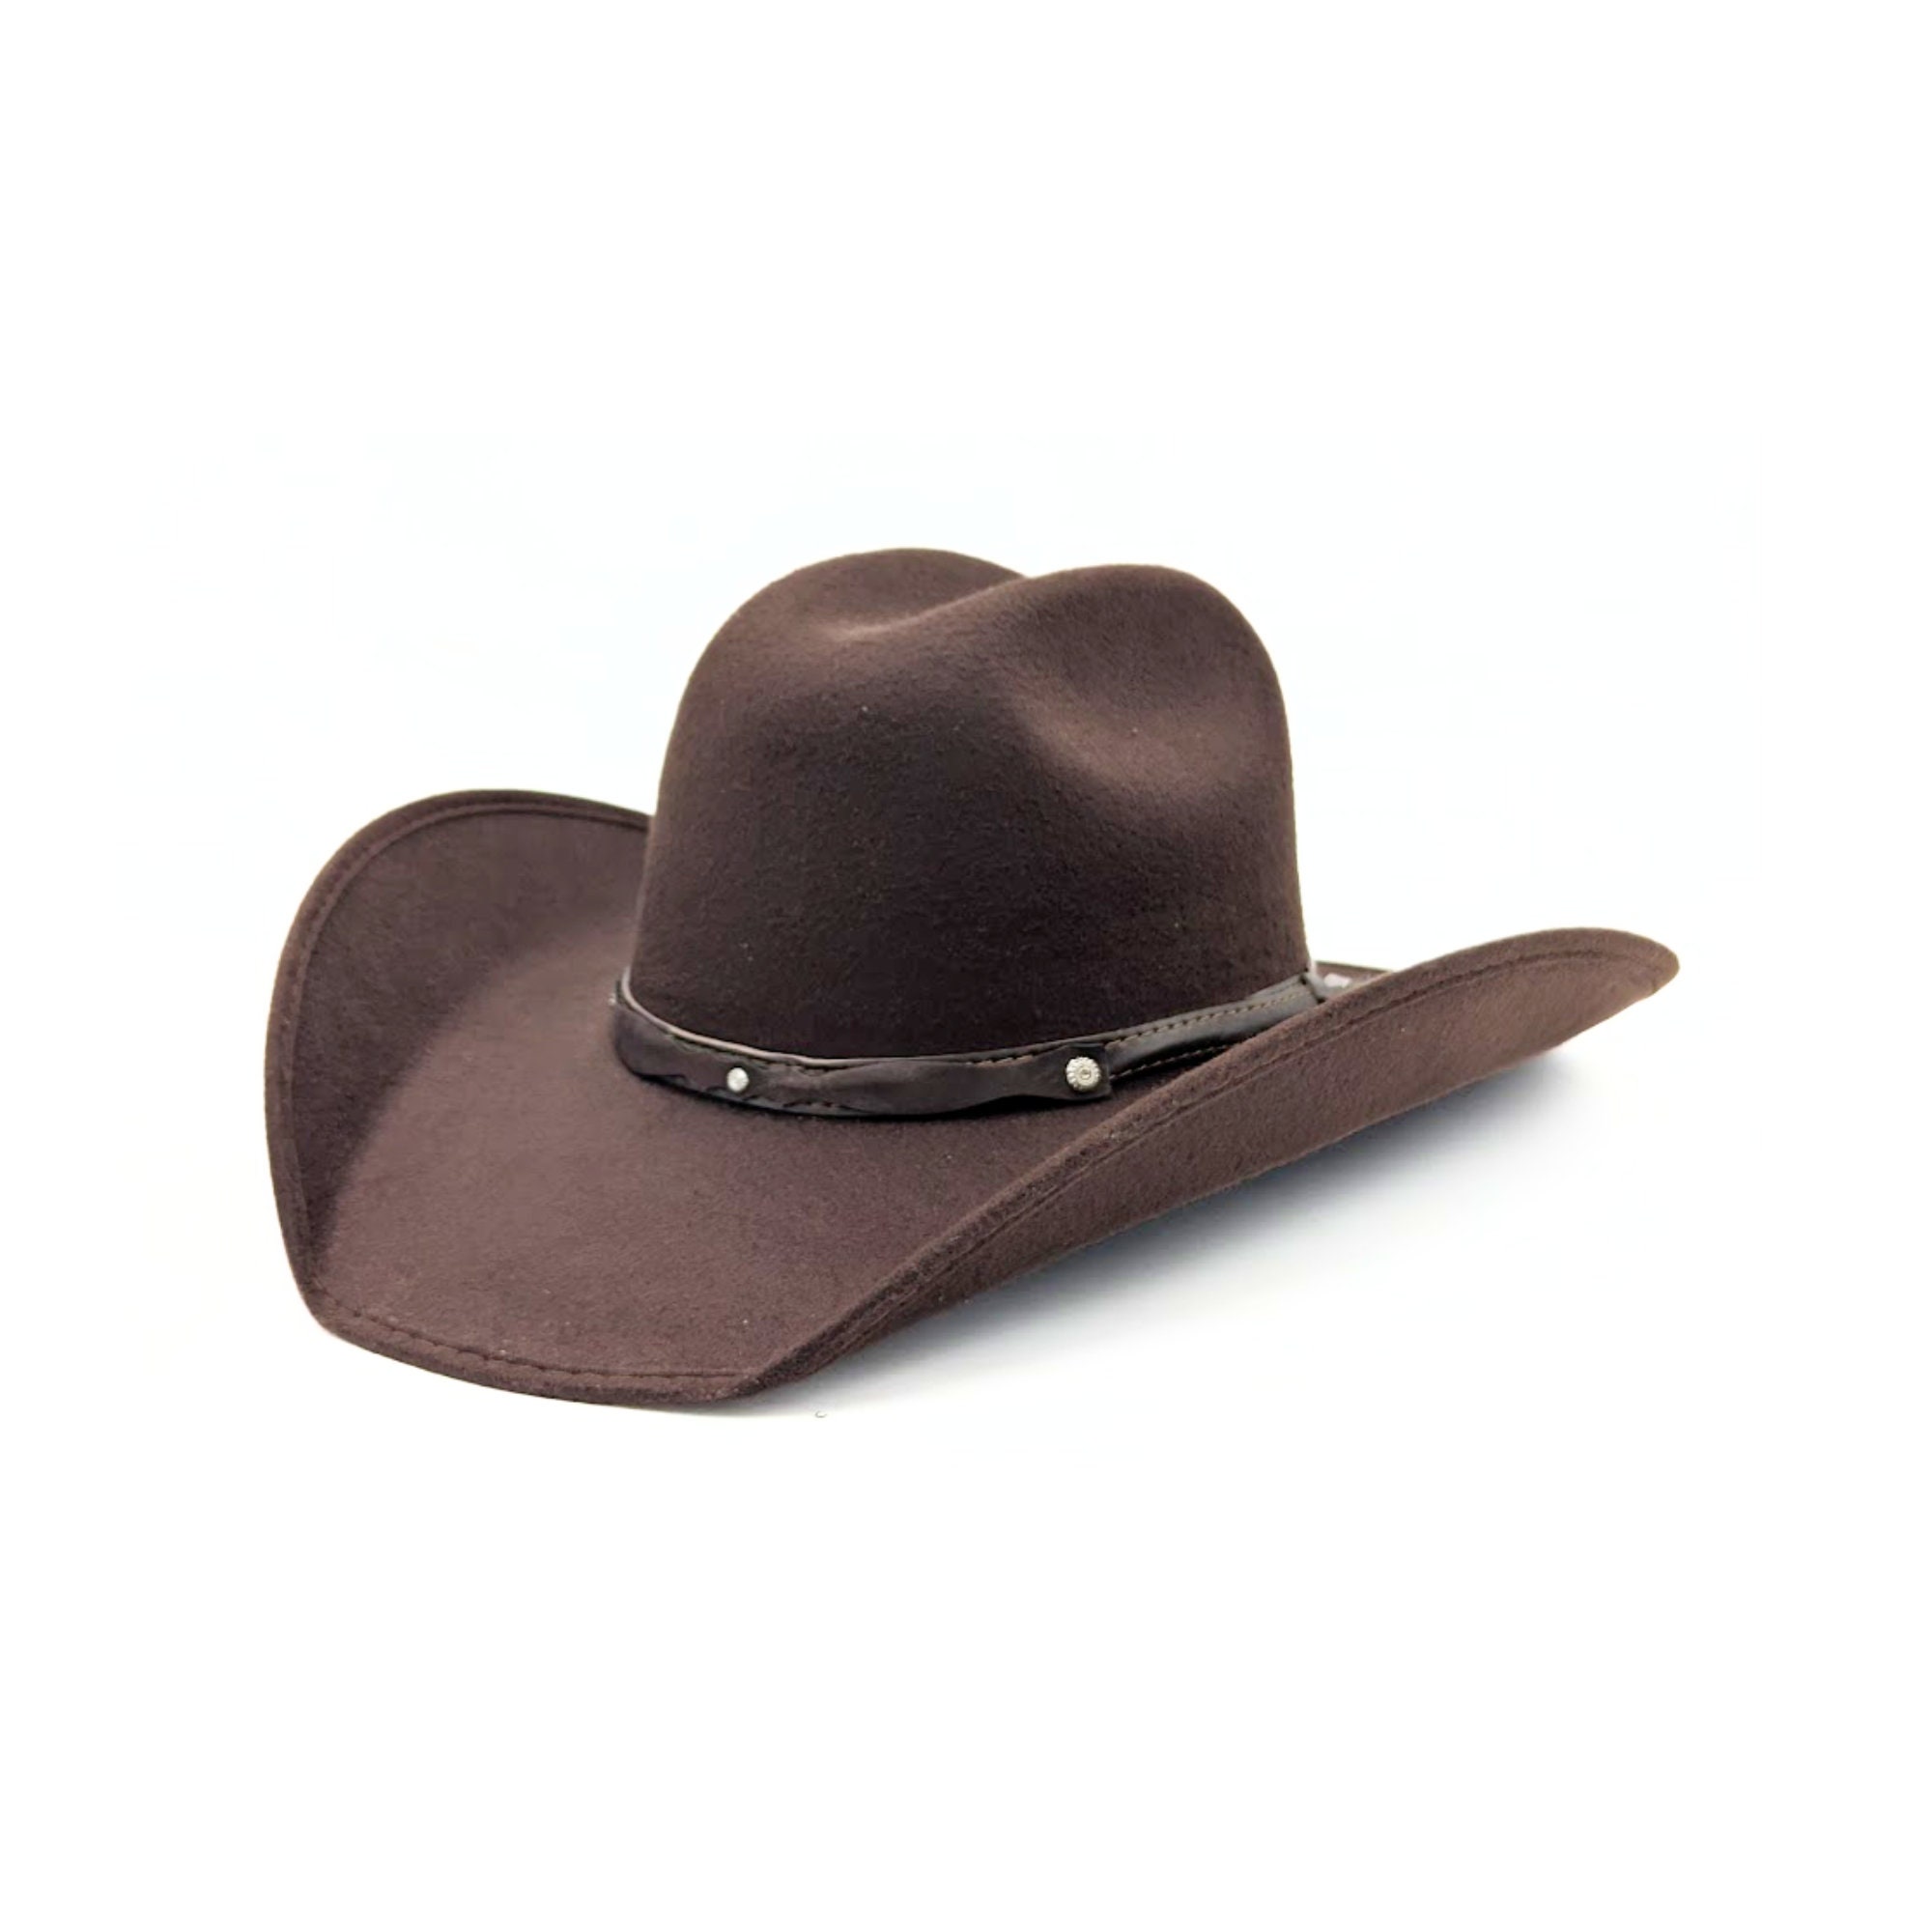 M & F Western Felt Hat Cleaner for Dark Colors